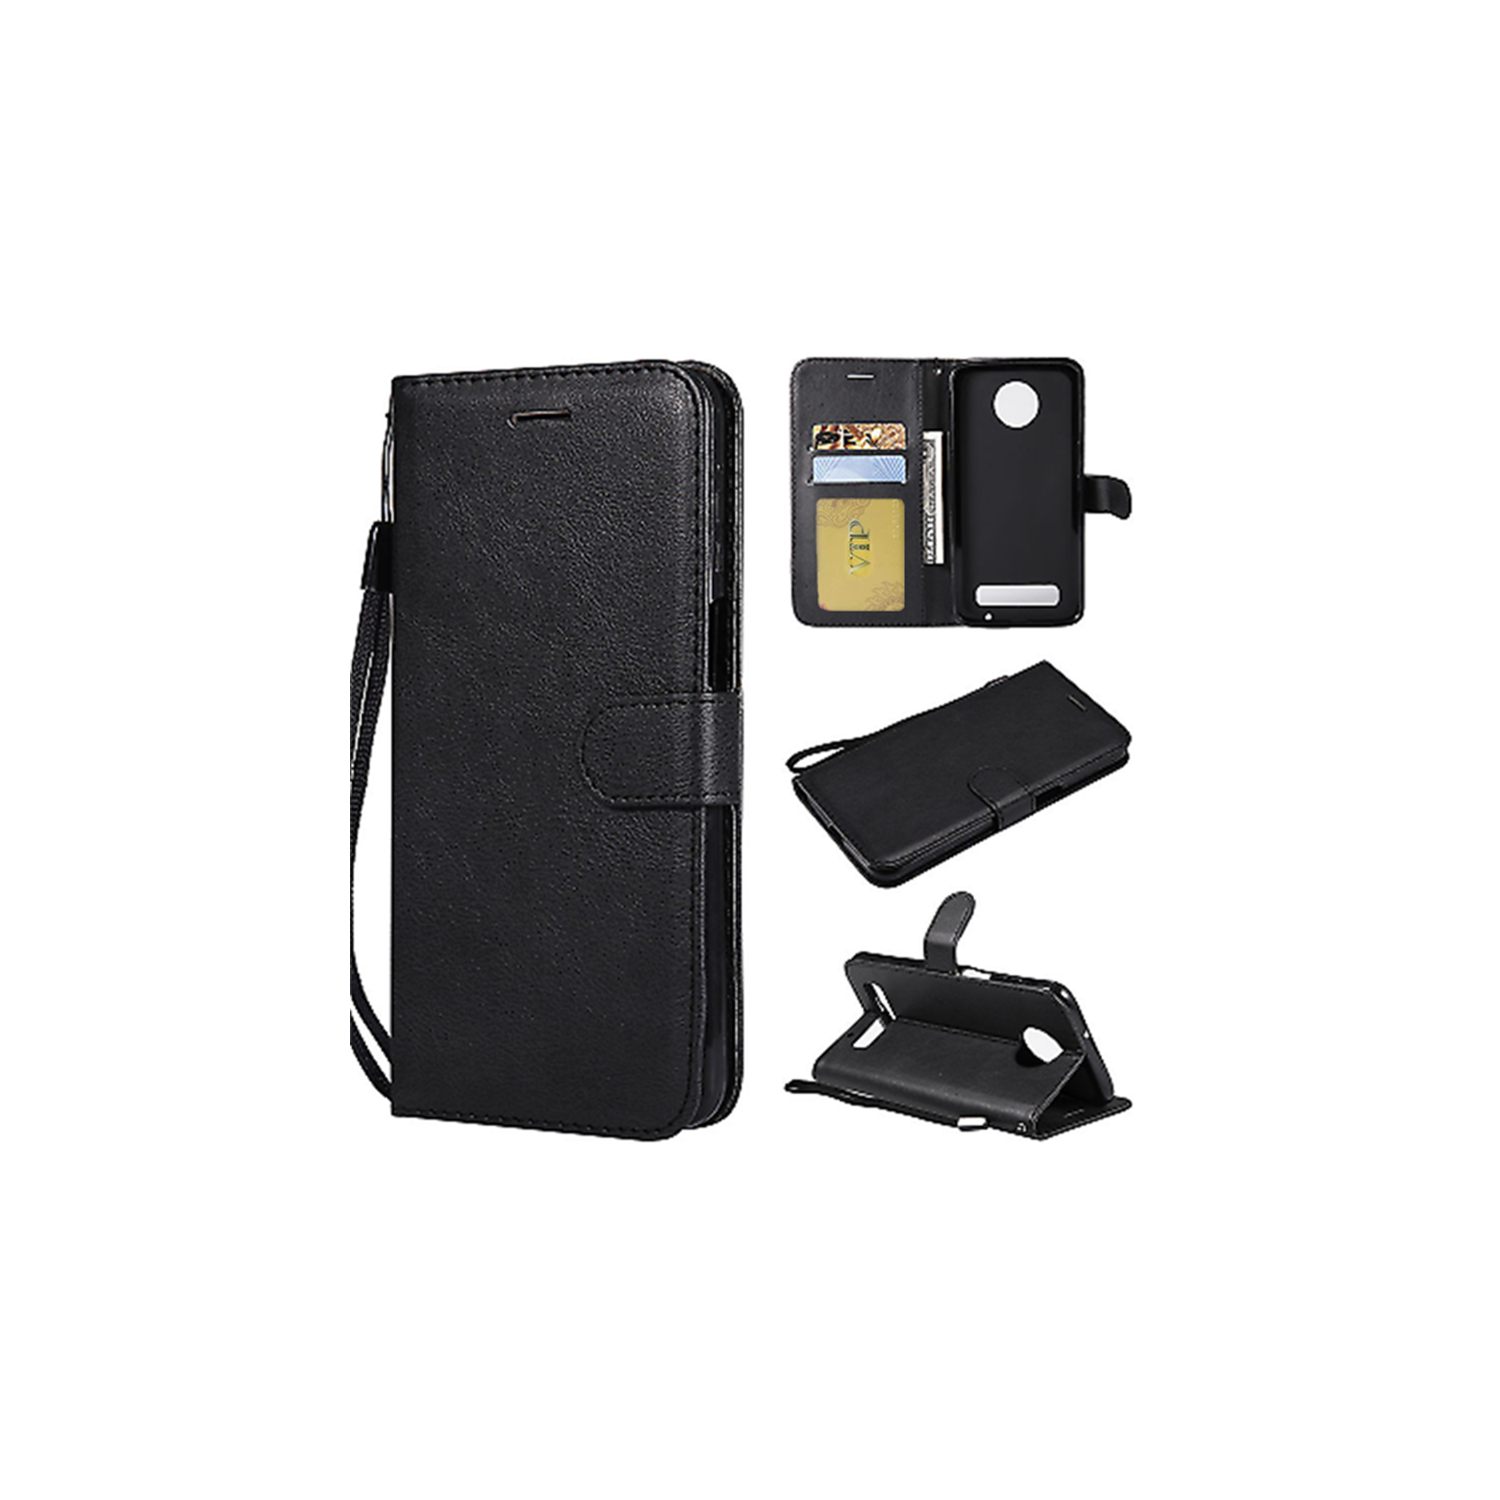 [CS] Motorola Moto Z3 Play Case, Magnetic Leather Folio Wallet Flip Case Cover with Card Slot, Black